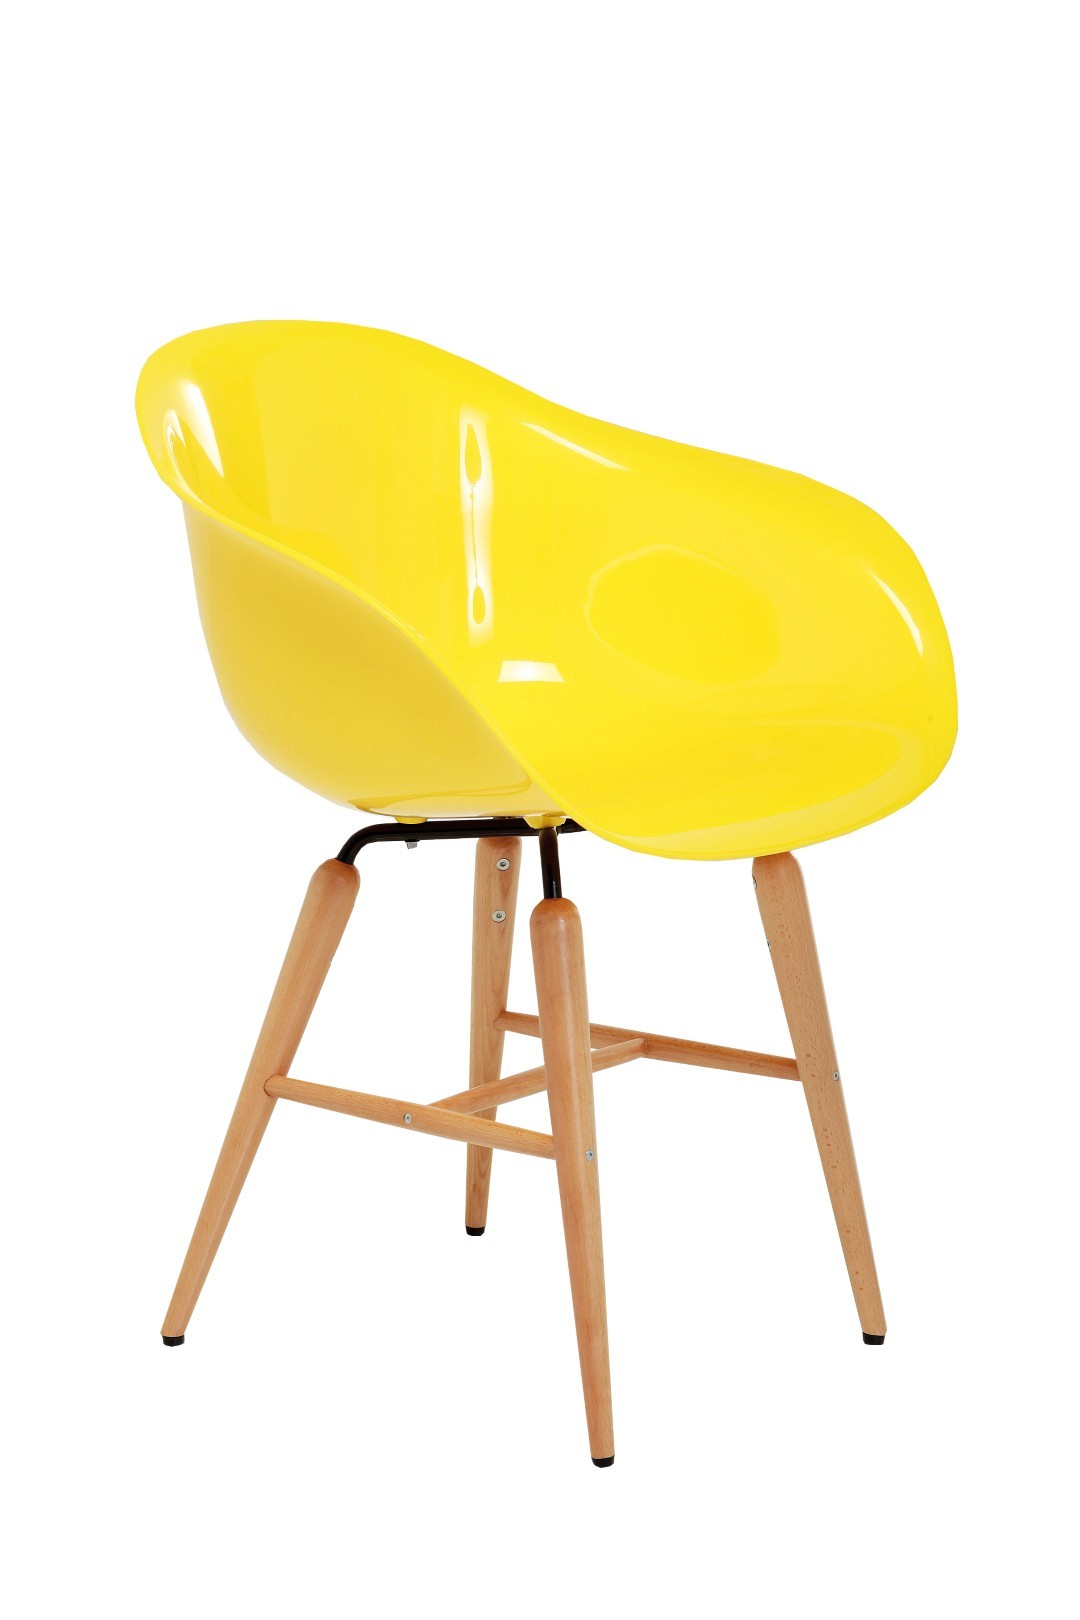 Armrest beech leg designer chair plastic shell yellow